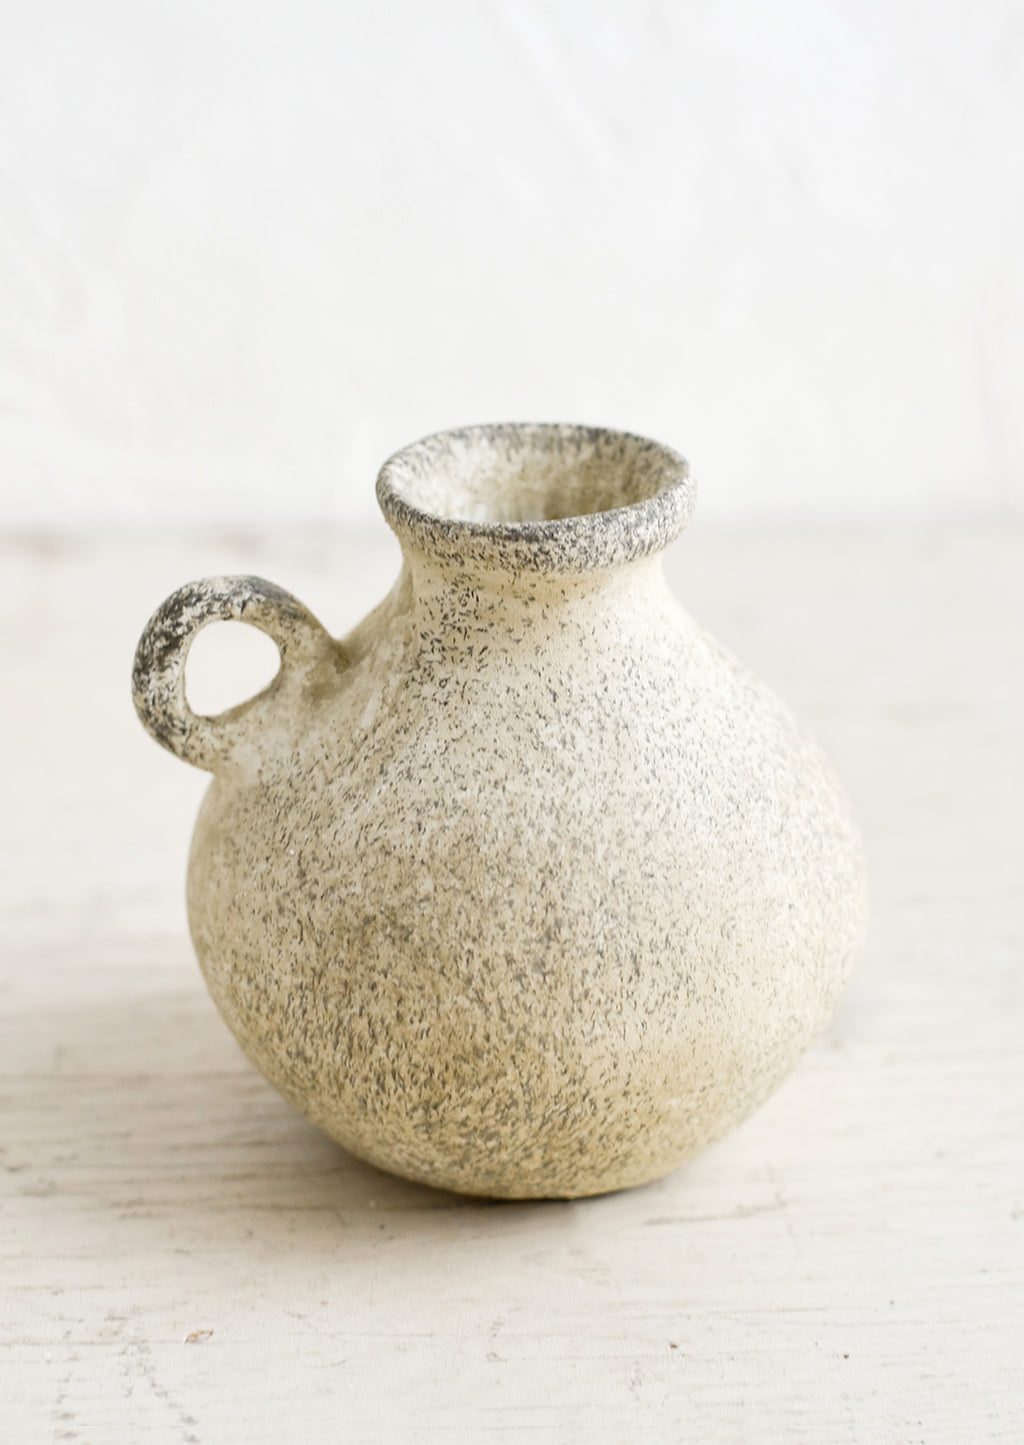 2: A petite ceramic bud vase in tan patina finish.